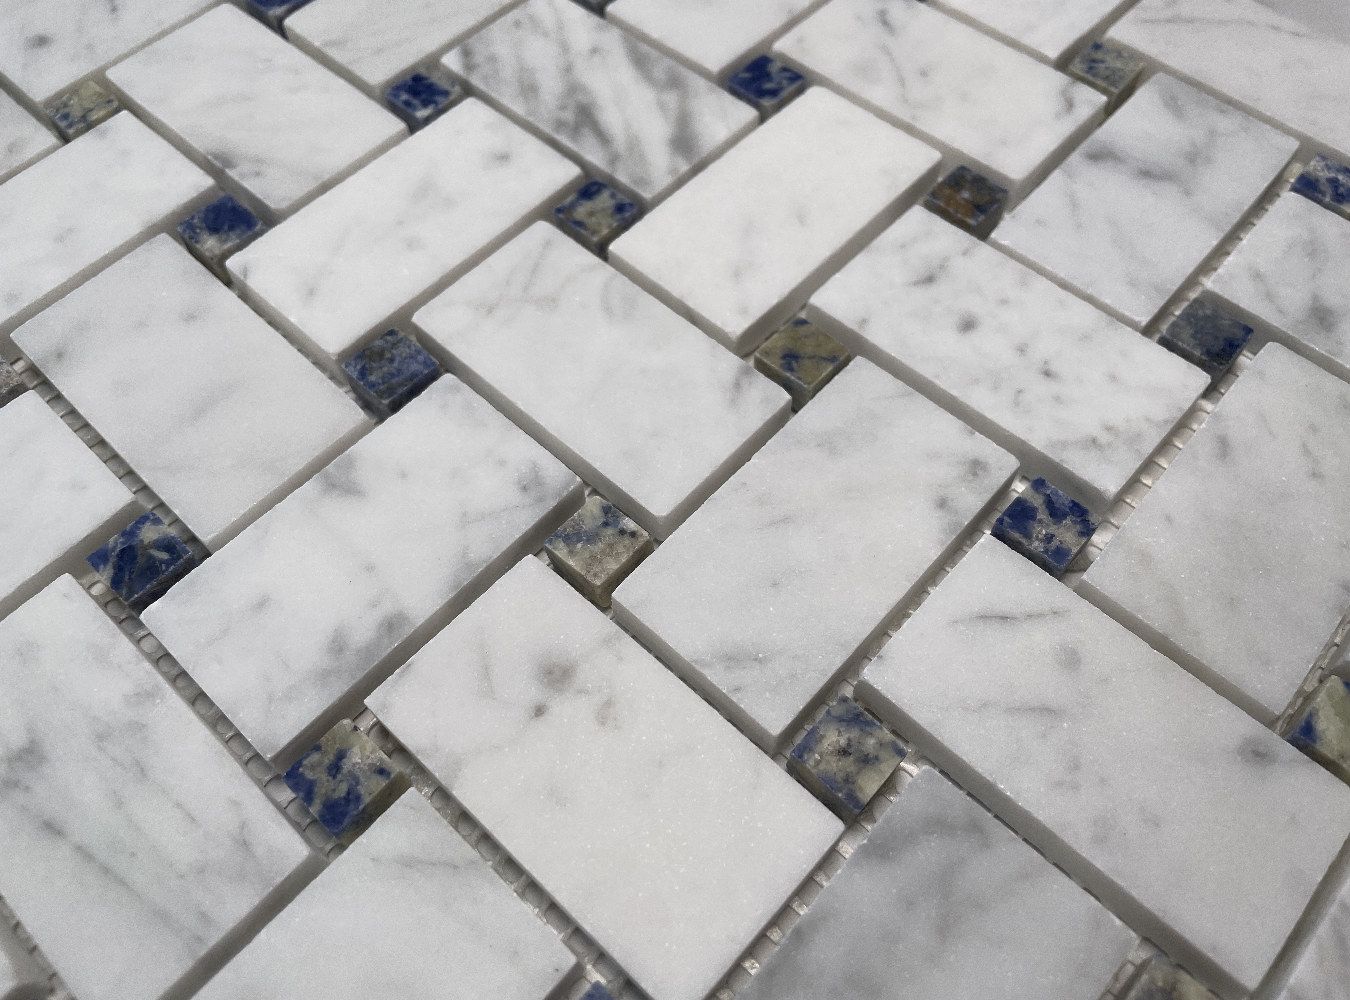 Bathroom Shower Floor etc. 1X1 Square 1X1 Square Collection 5 Sheets Marble Mosaic Tile for Kitchen Backsplash Polished Simple Tile Set of 5 Sheets, EDMM0101 - Emperador Dark 12X12X3/8